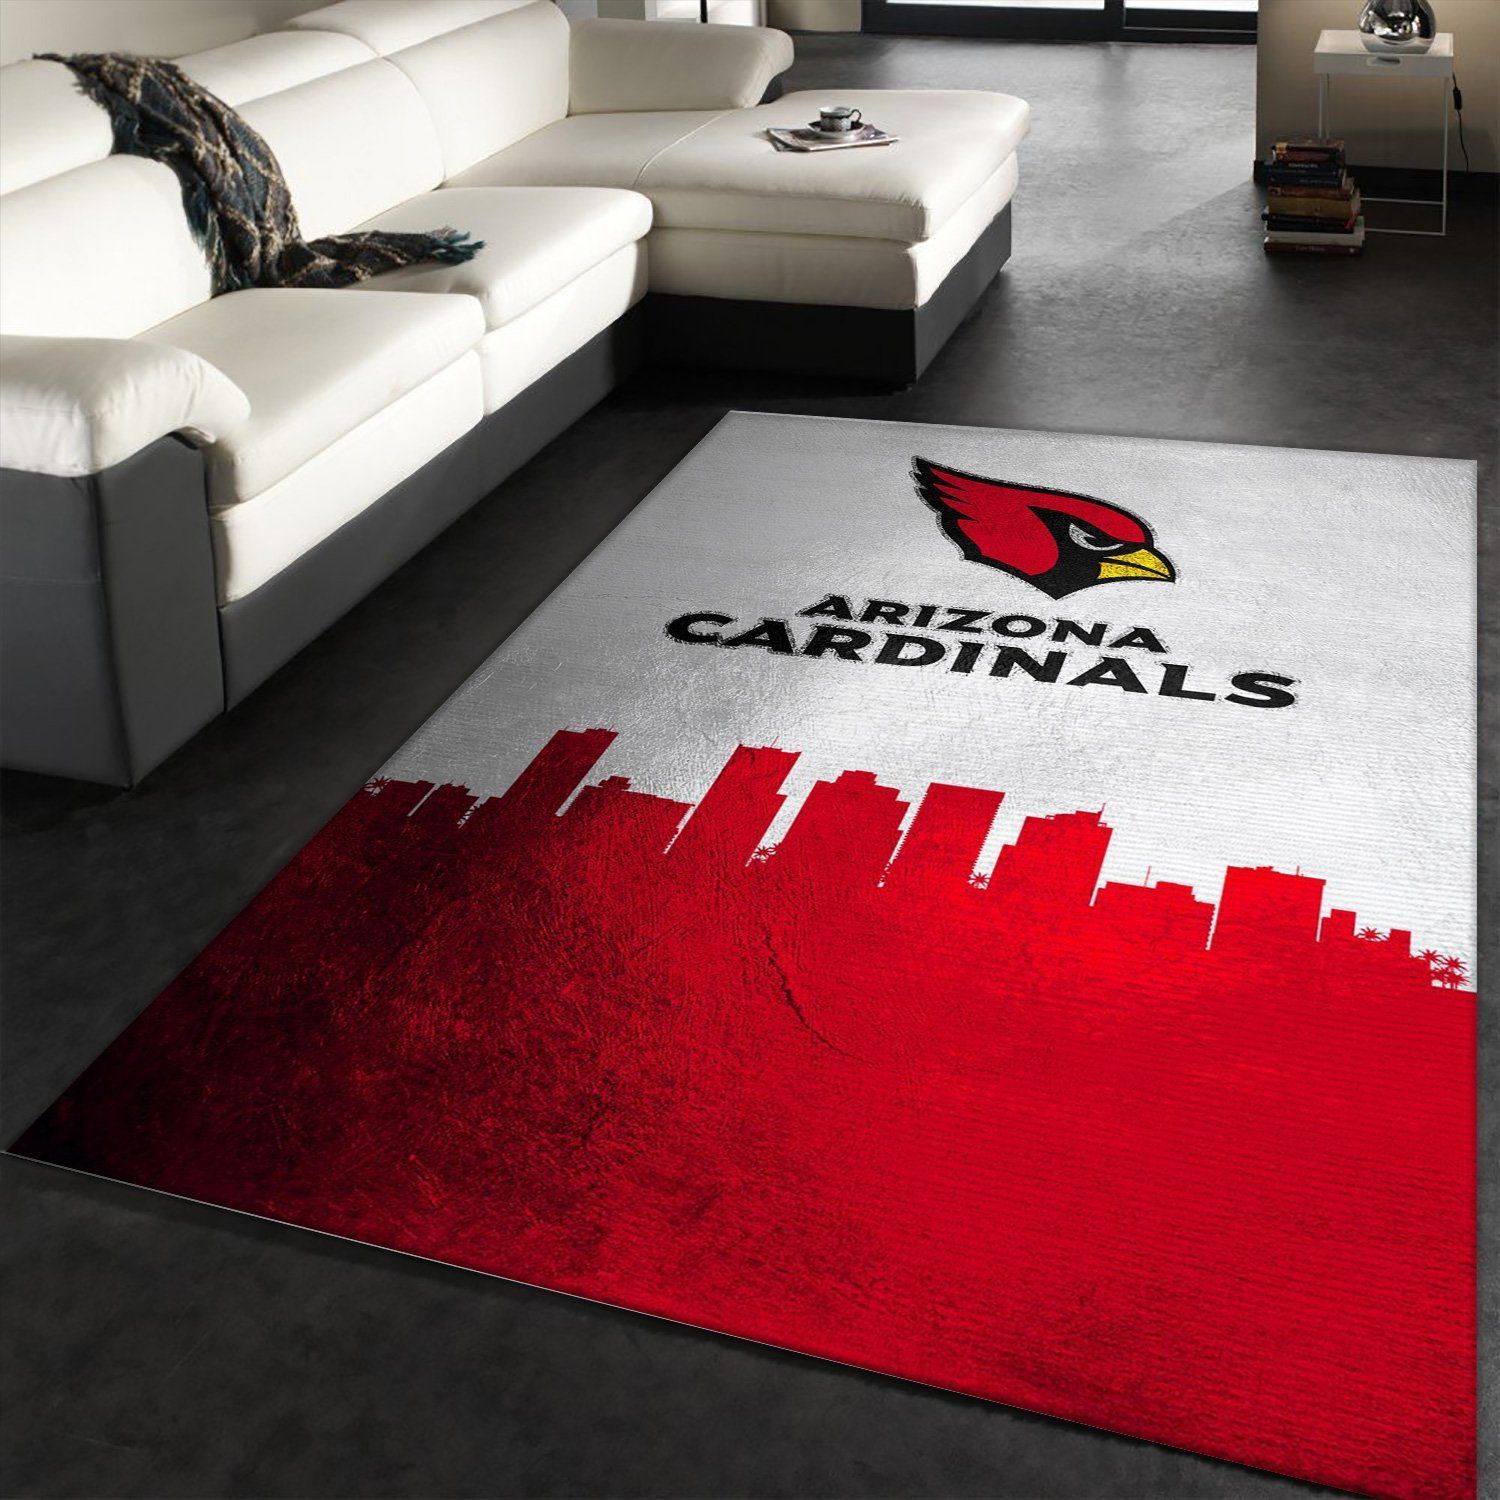 Arizona Cardinals Skyline NFL Team Logos Area Rug, Living room and bedroom Rug, Family Gift US Decor - Indoor Outdoor Rugs 1